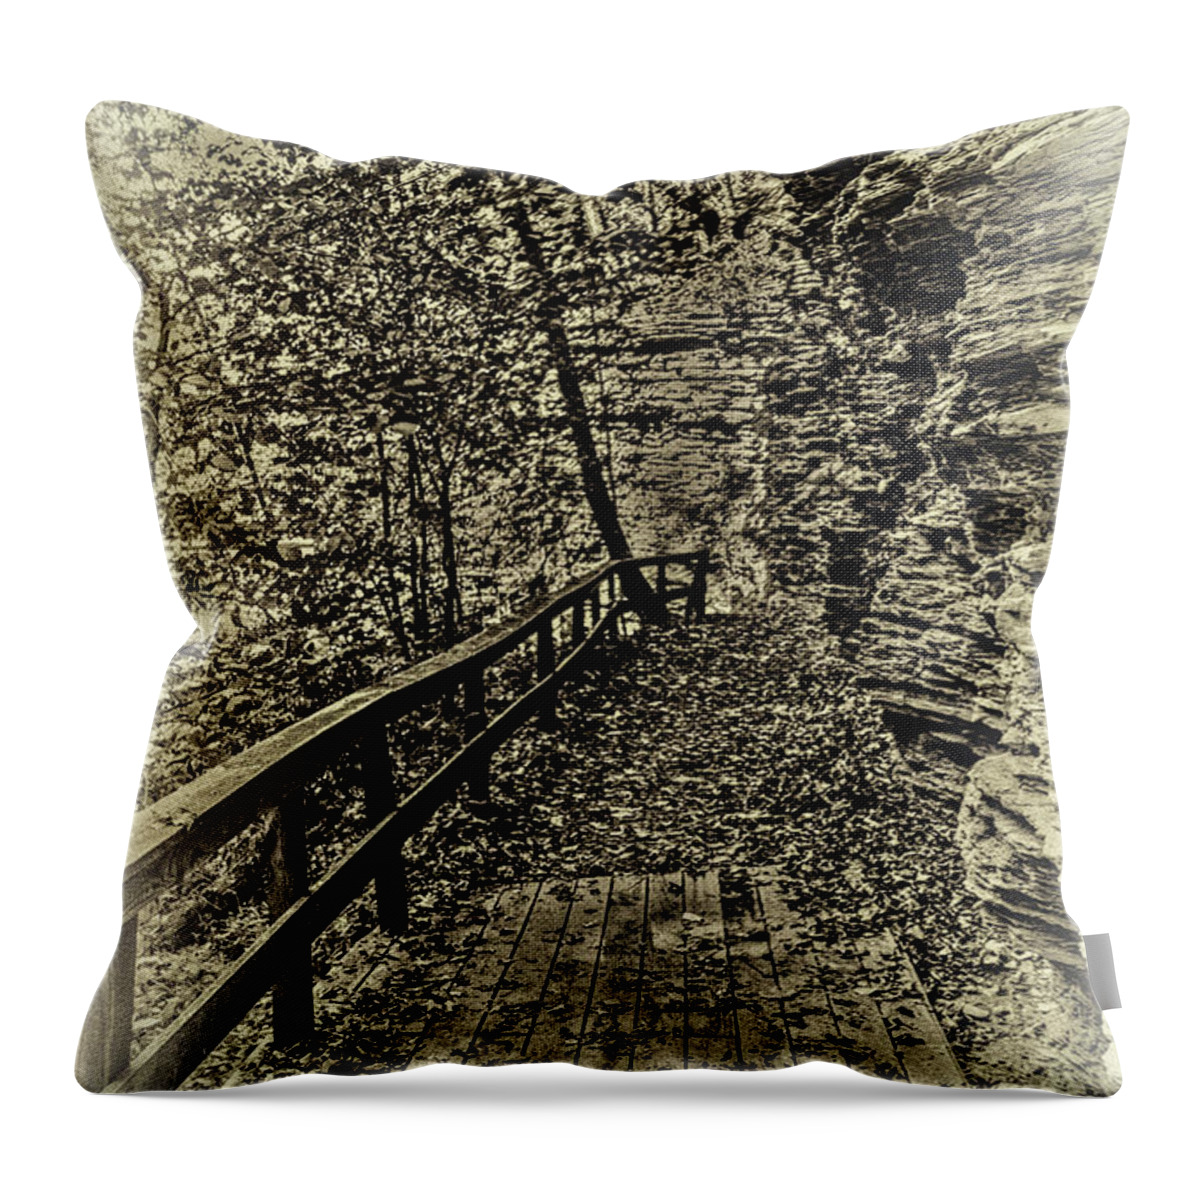 Havana Glen Throw Pillow featuring the photograph Havana Pathway in Sepia by William Norton